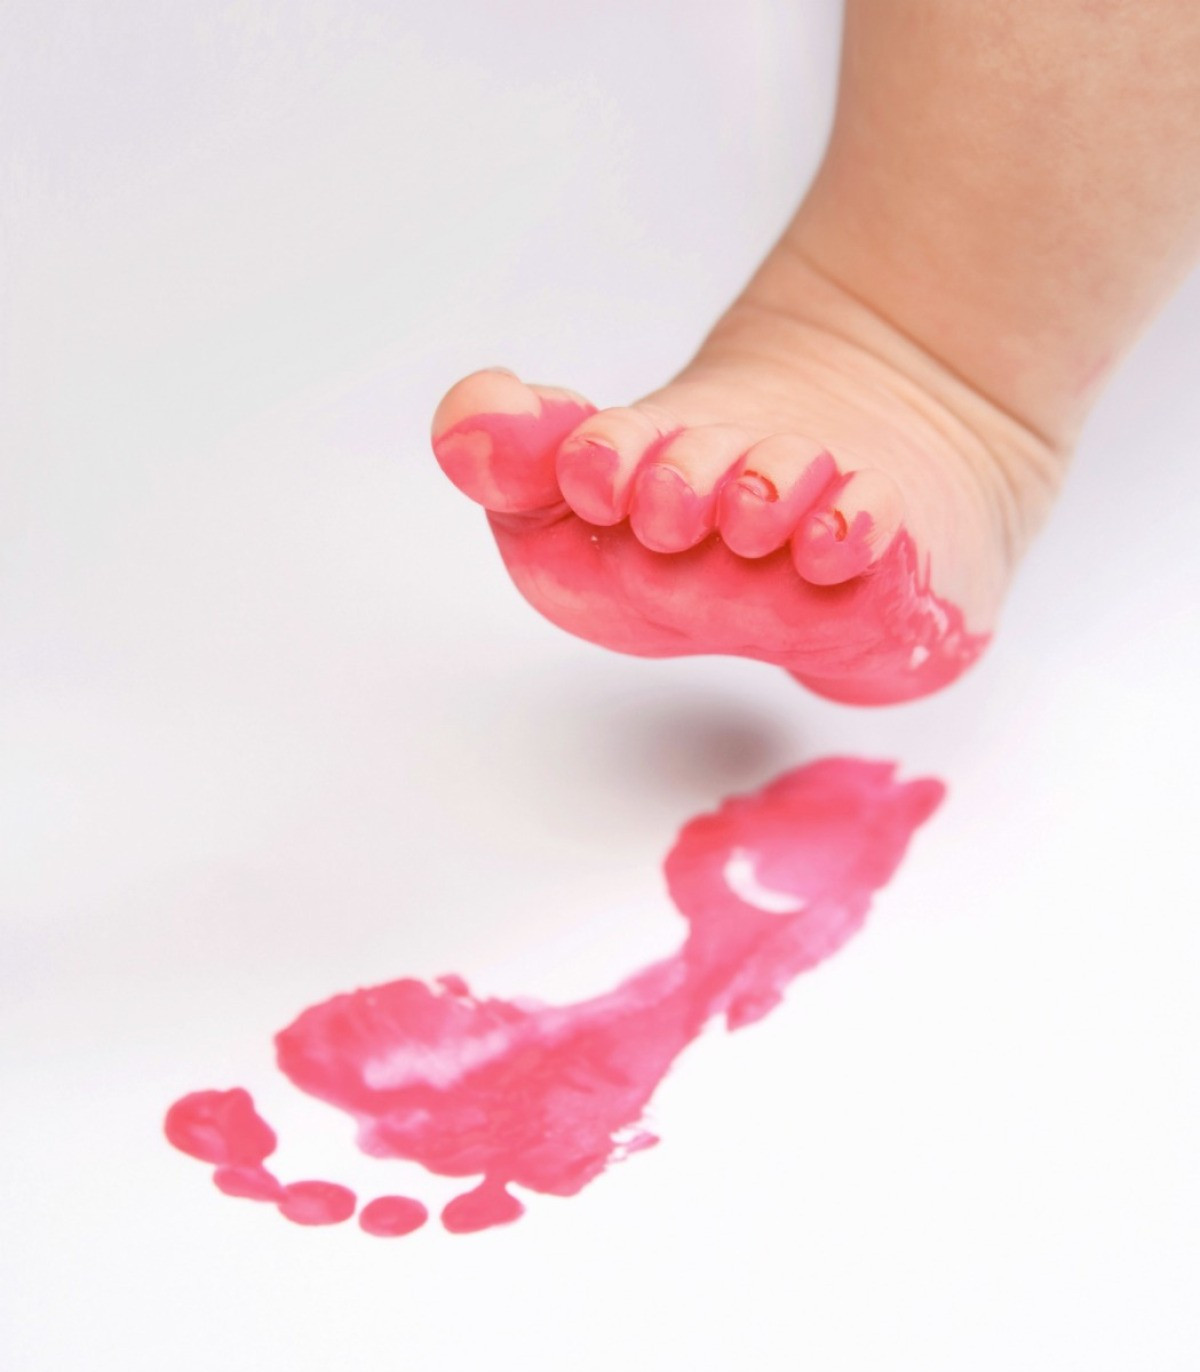 Baby Footprint Crafts
 Craft Ideas Using Baby Footprints